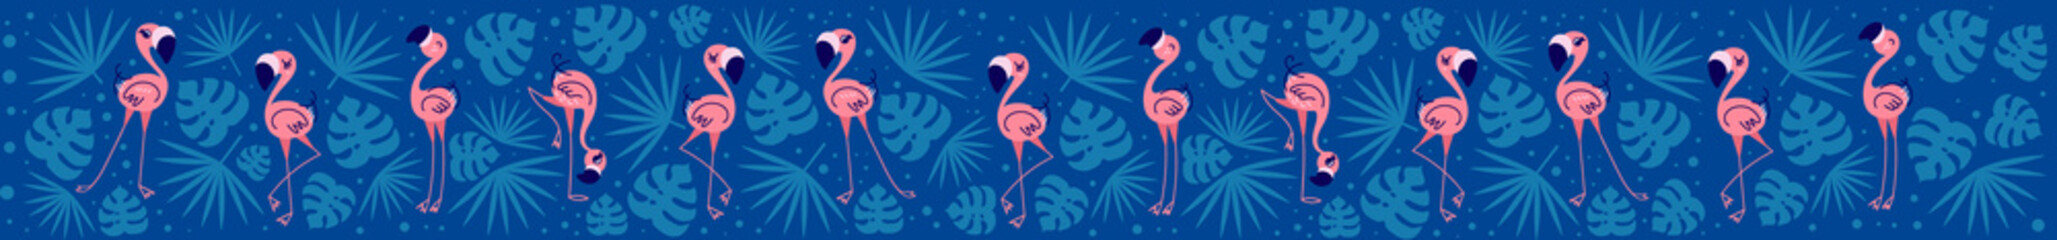 Tropical web banner with cute cartoon flamingos. Social media cover image. Flat vector illustration.